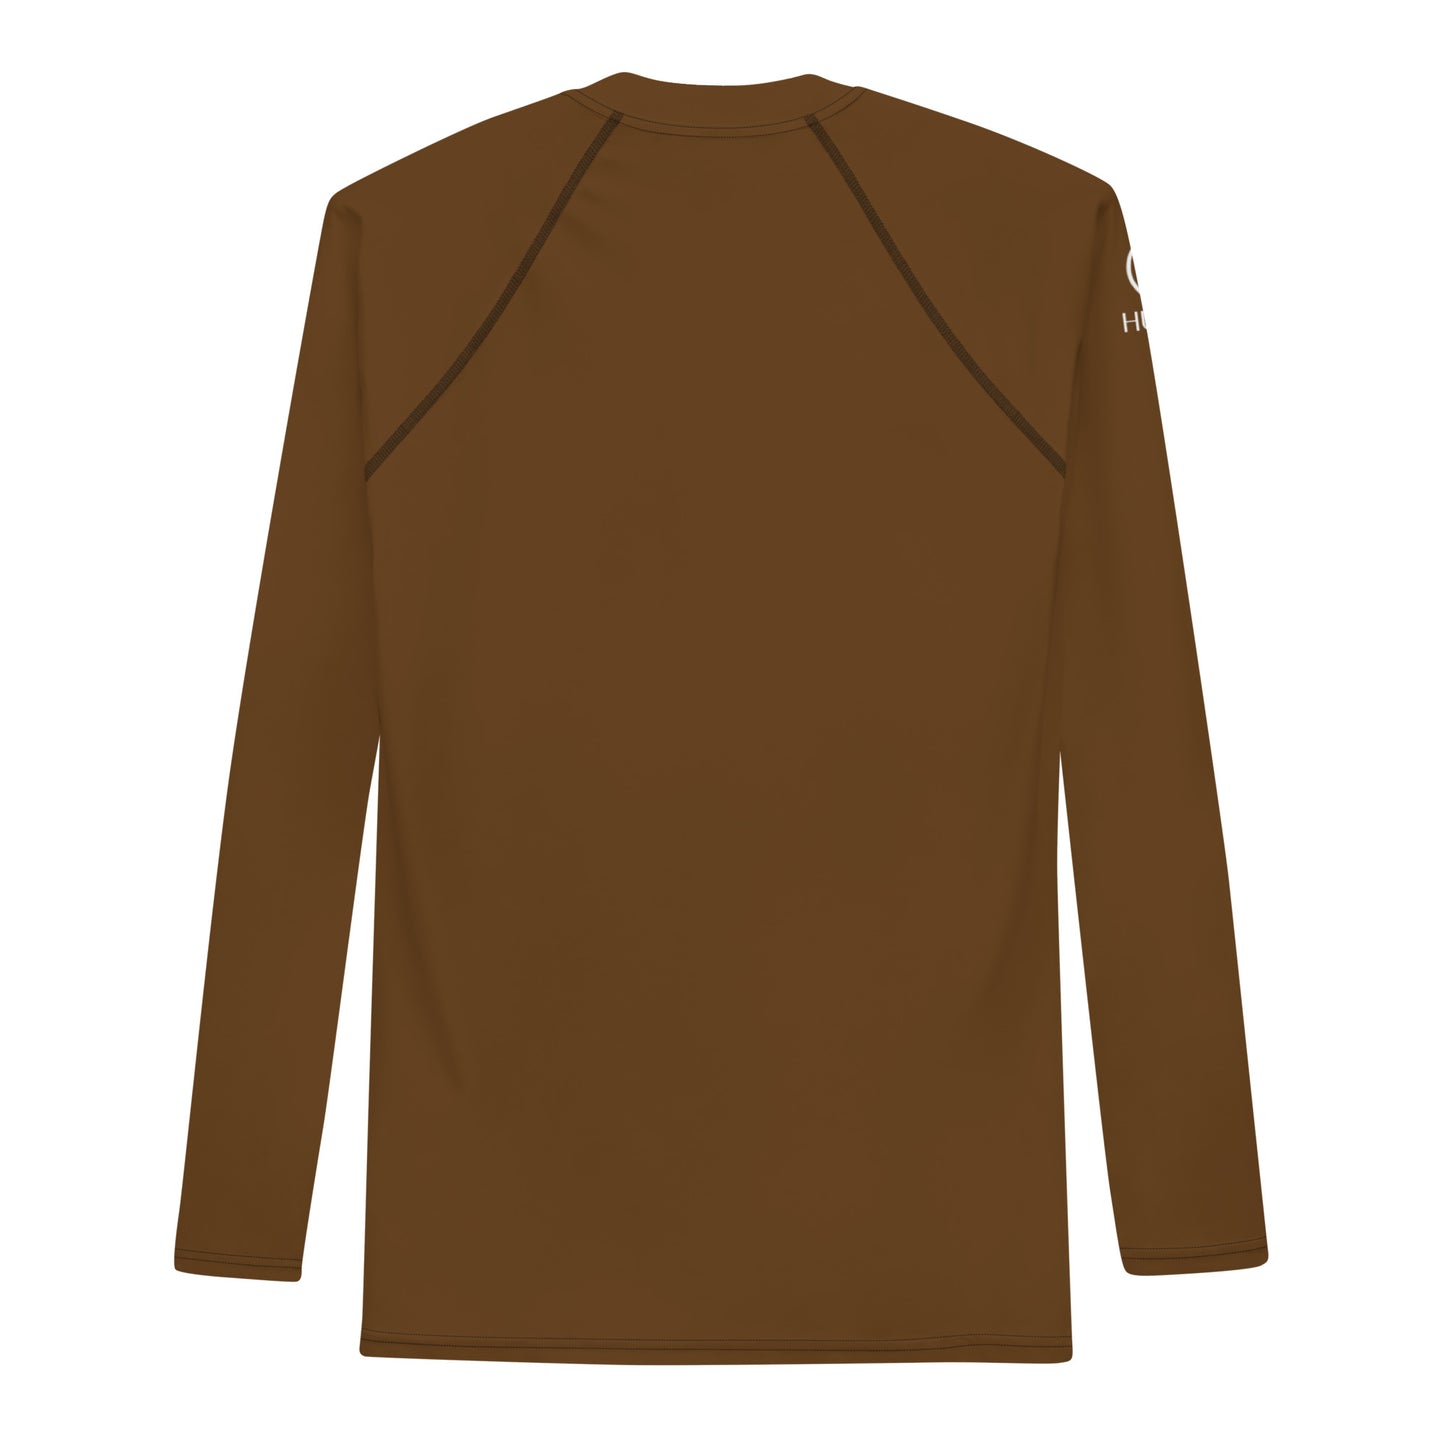 Humble Sportswear™ Men's Pure Brown Rash Guard - Mireille Fine Art